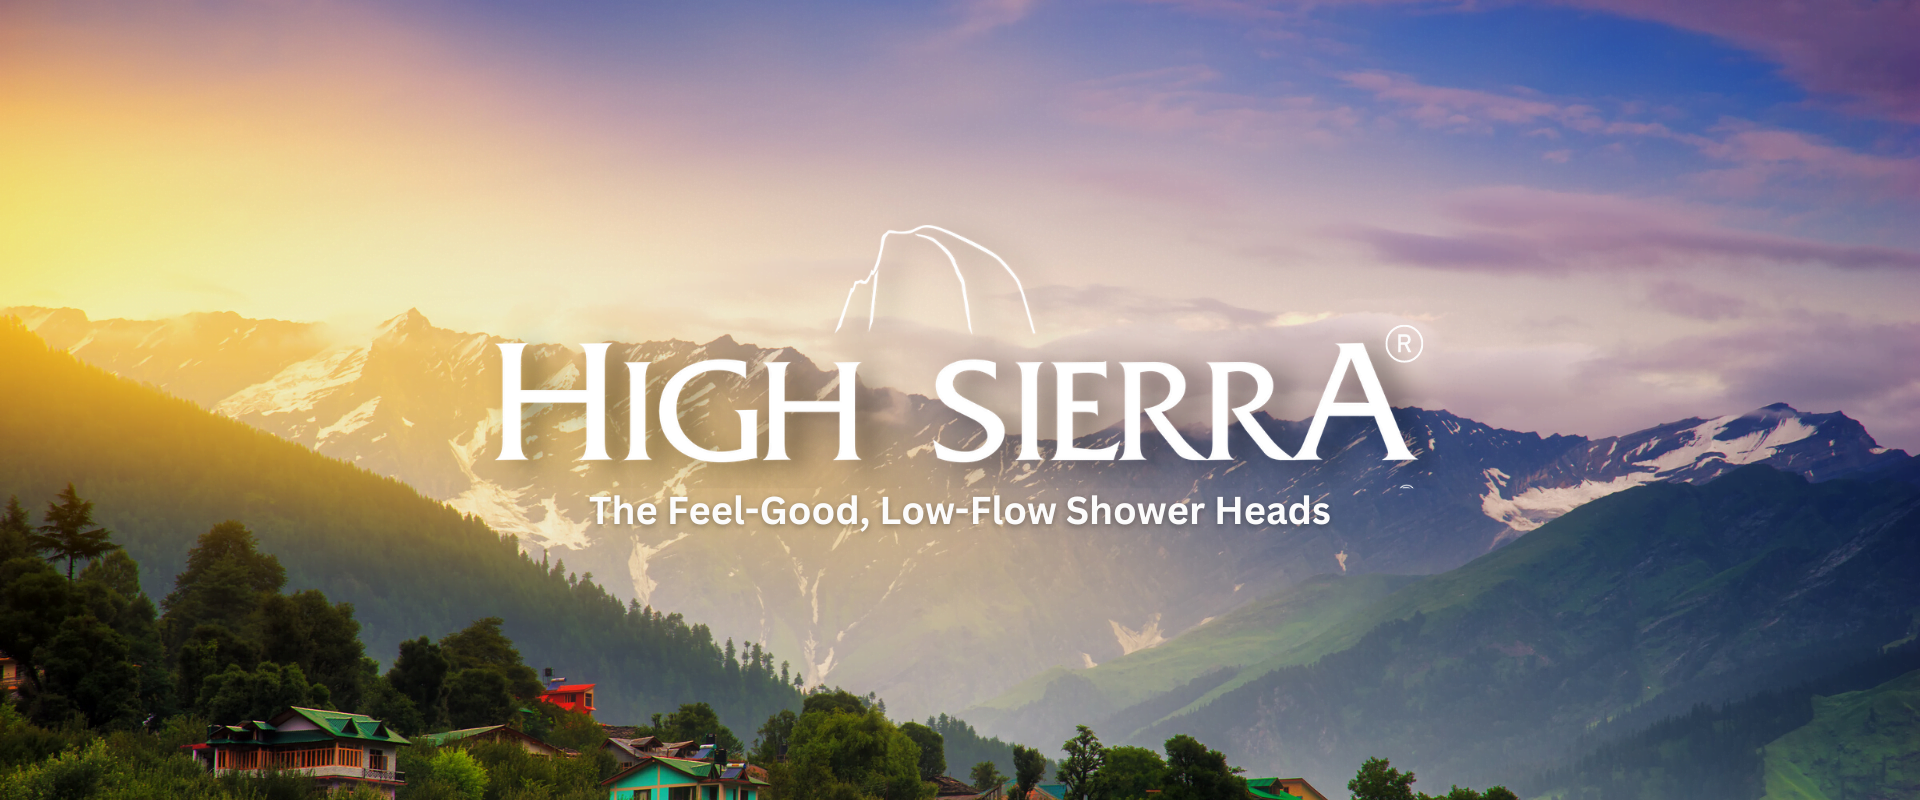 High Sierra Showerheads Slider Banner